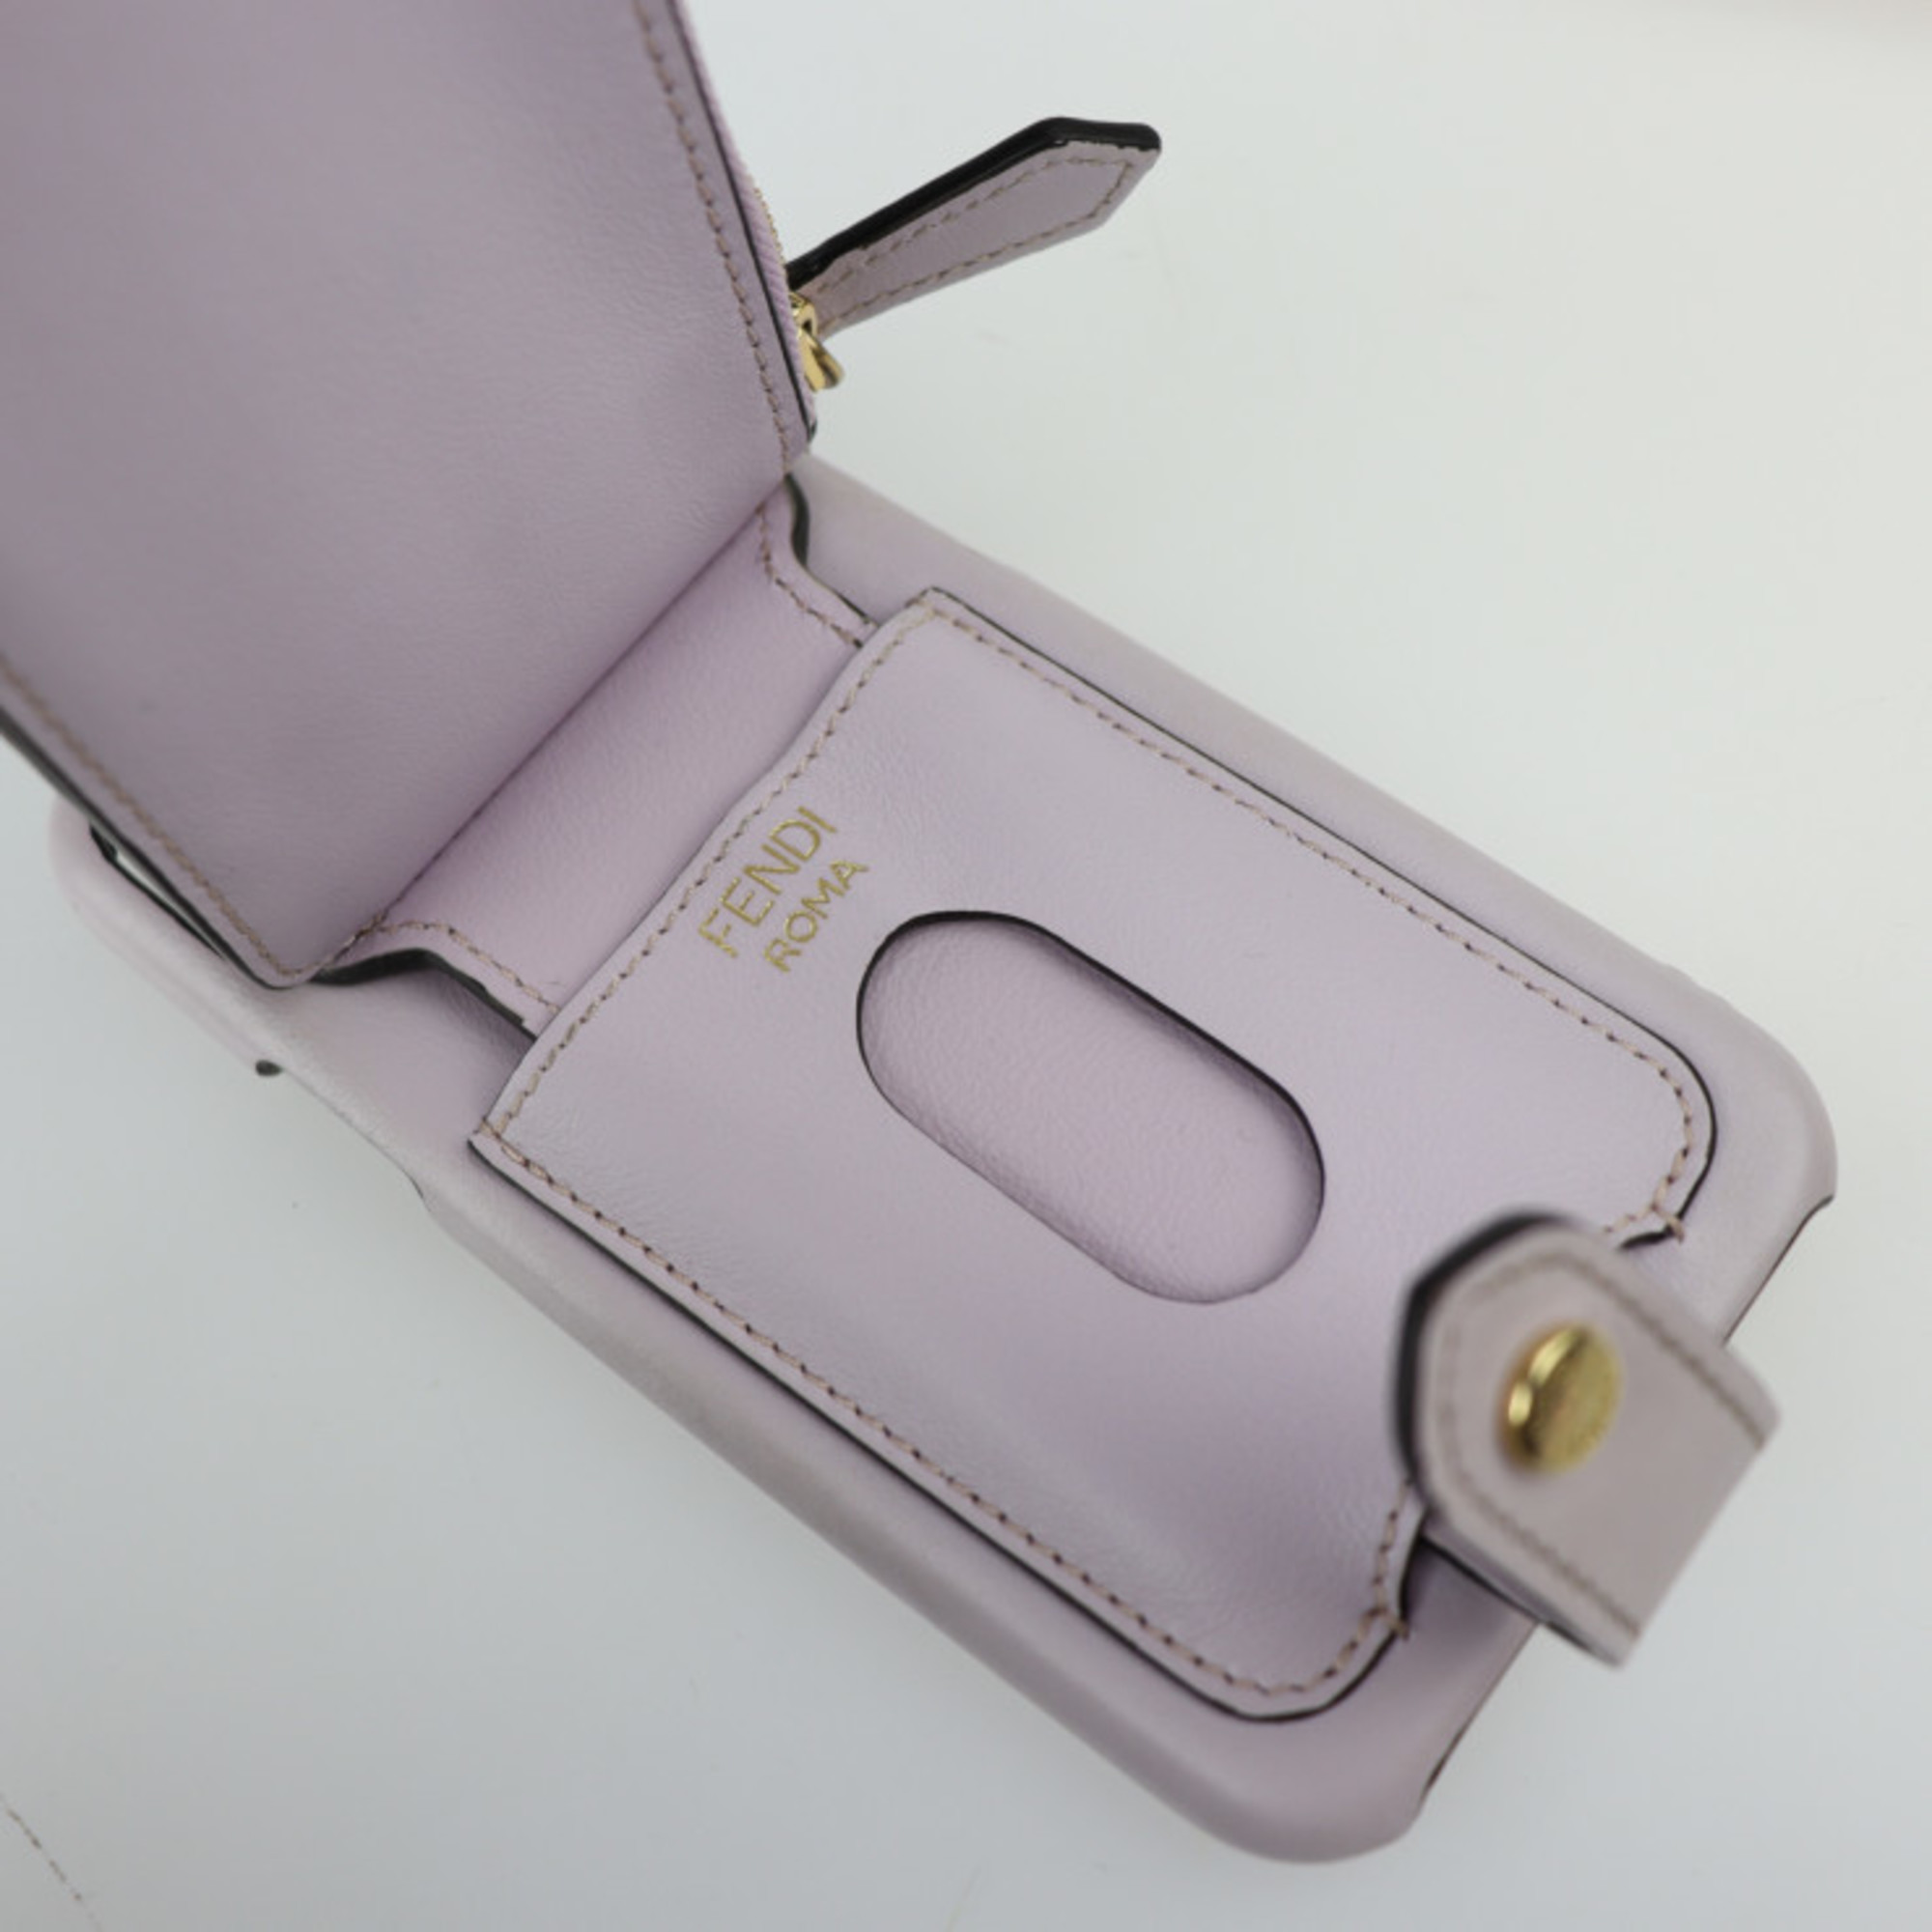 FENDI Fendi iPhone 11 Pro Case Other Accessories 7AR890 Leather Light Purple Gold Hardware Zucca Pattern Smartphone Cover Coin Purse Card